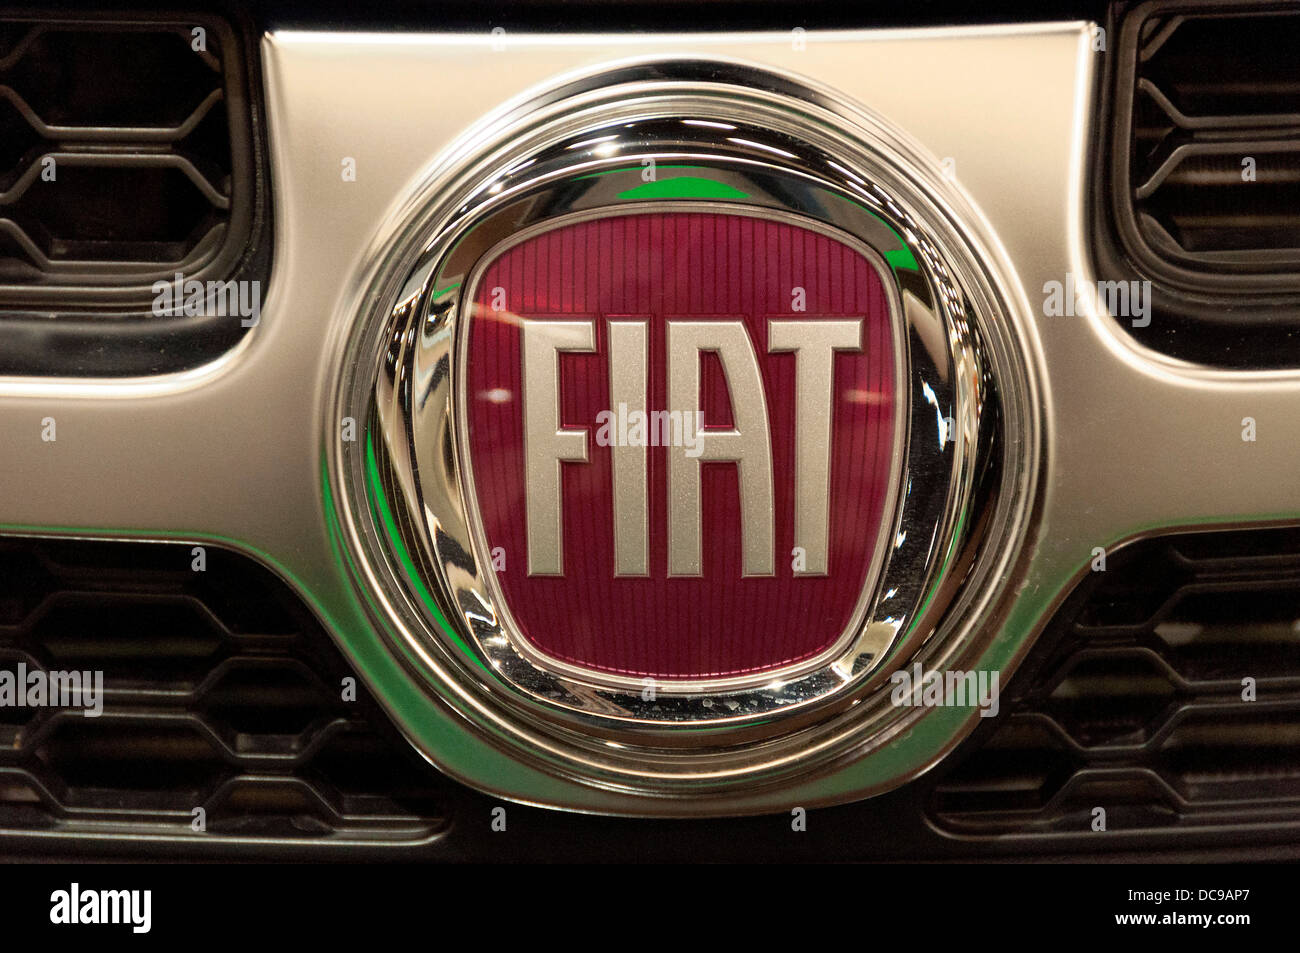 FIAT logo on a car Stock Photo